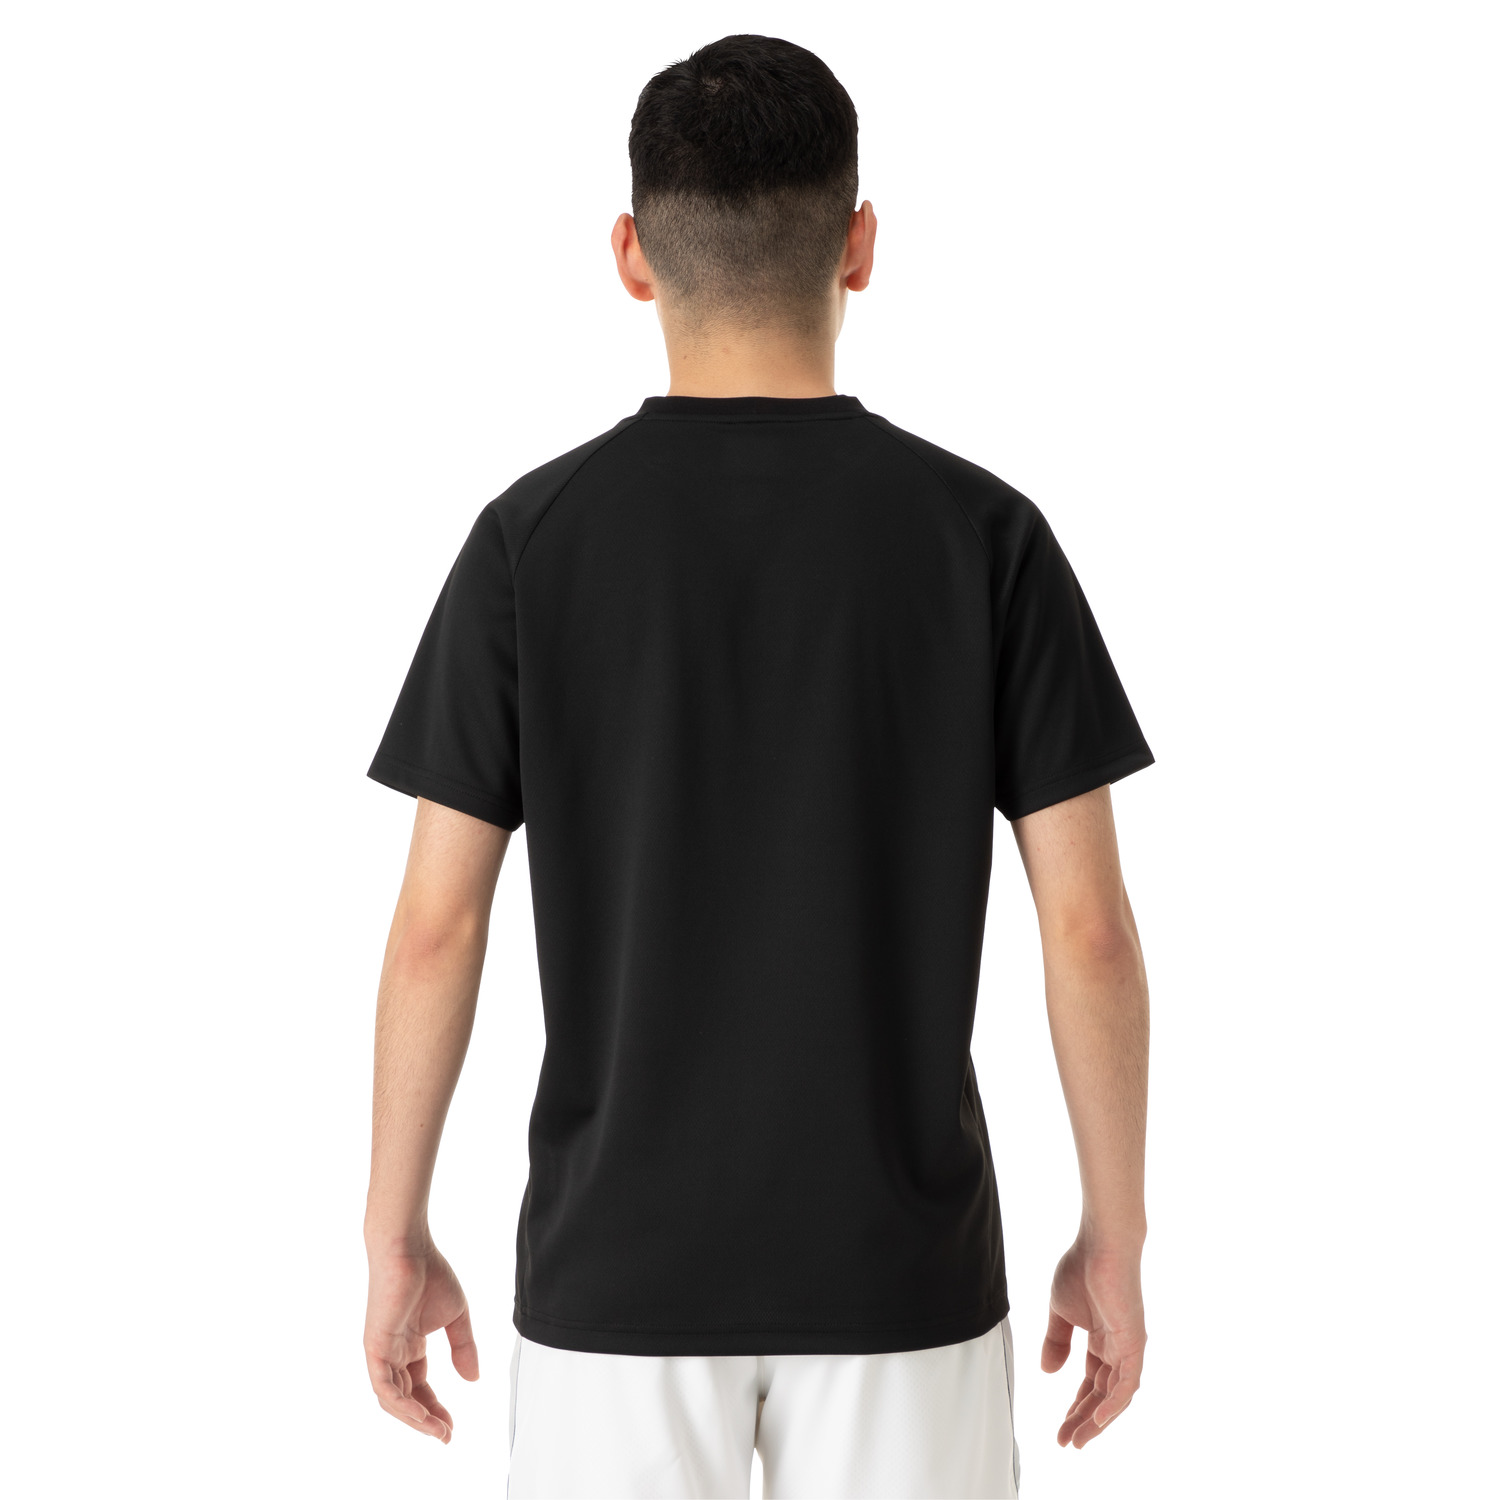 Yonex Premium Game Shirt 10605 Black (Made in Japan) MEN'S